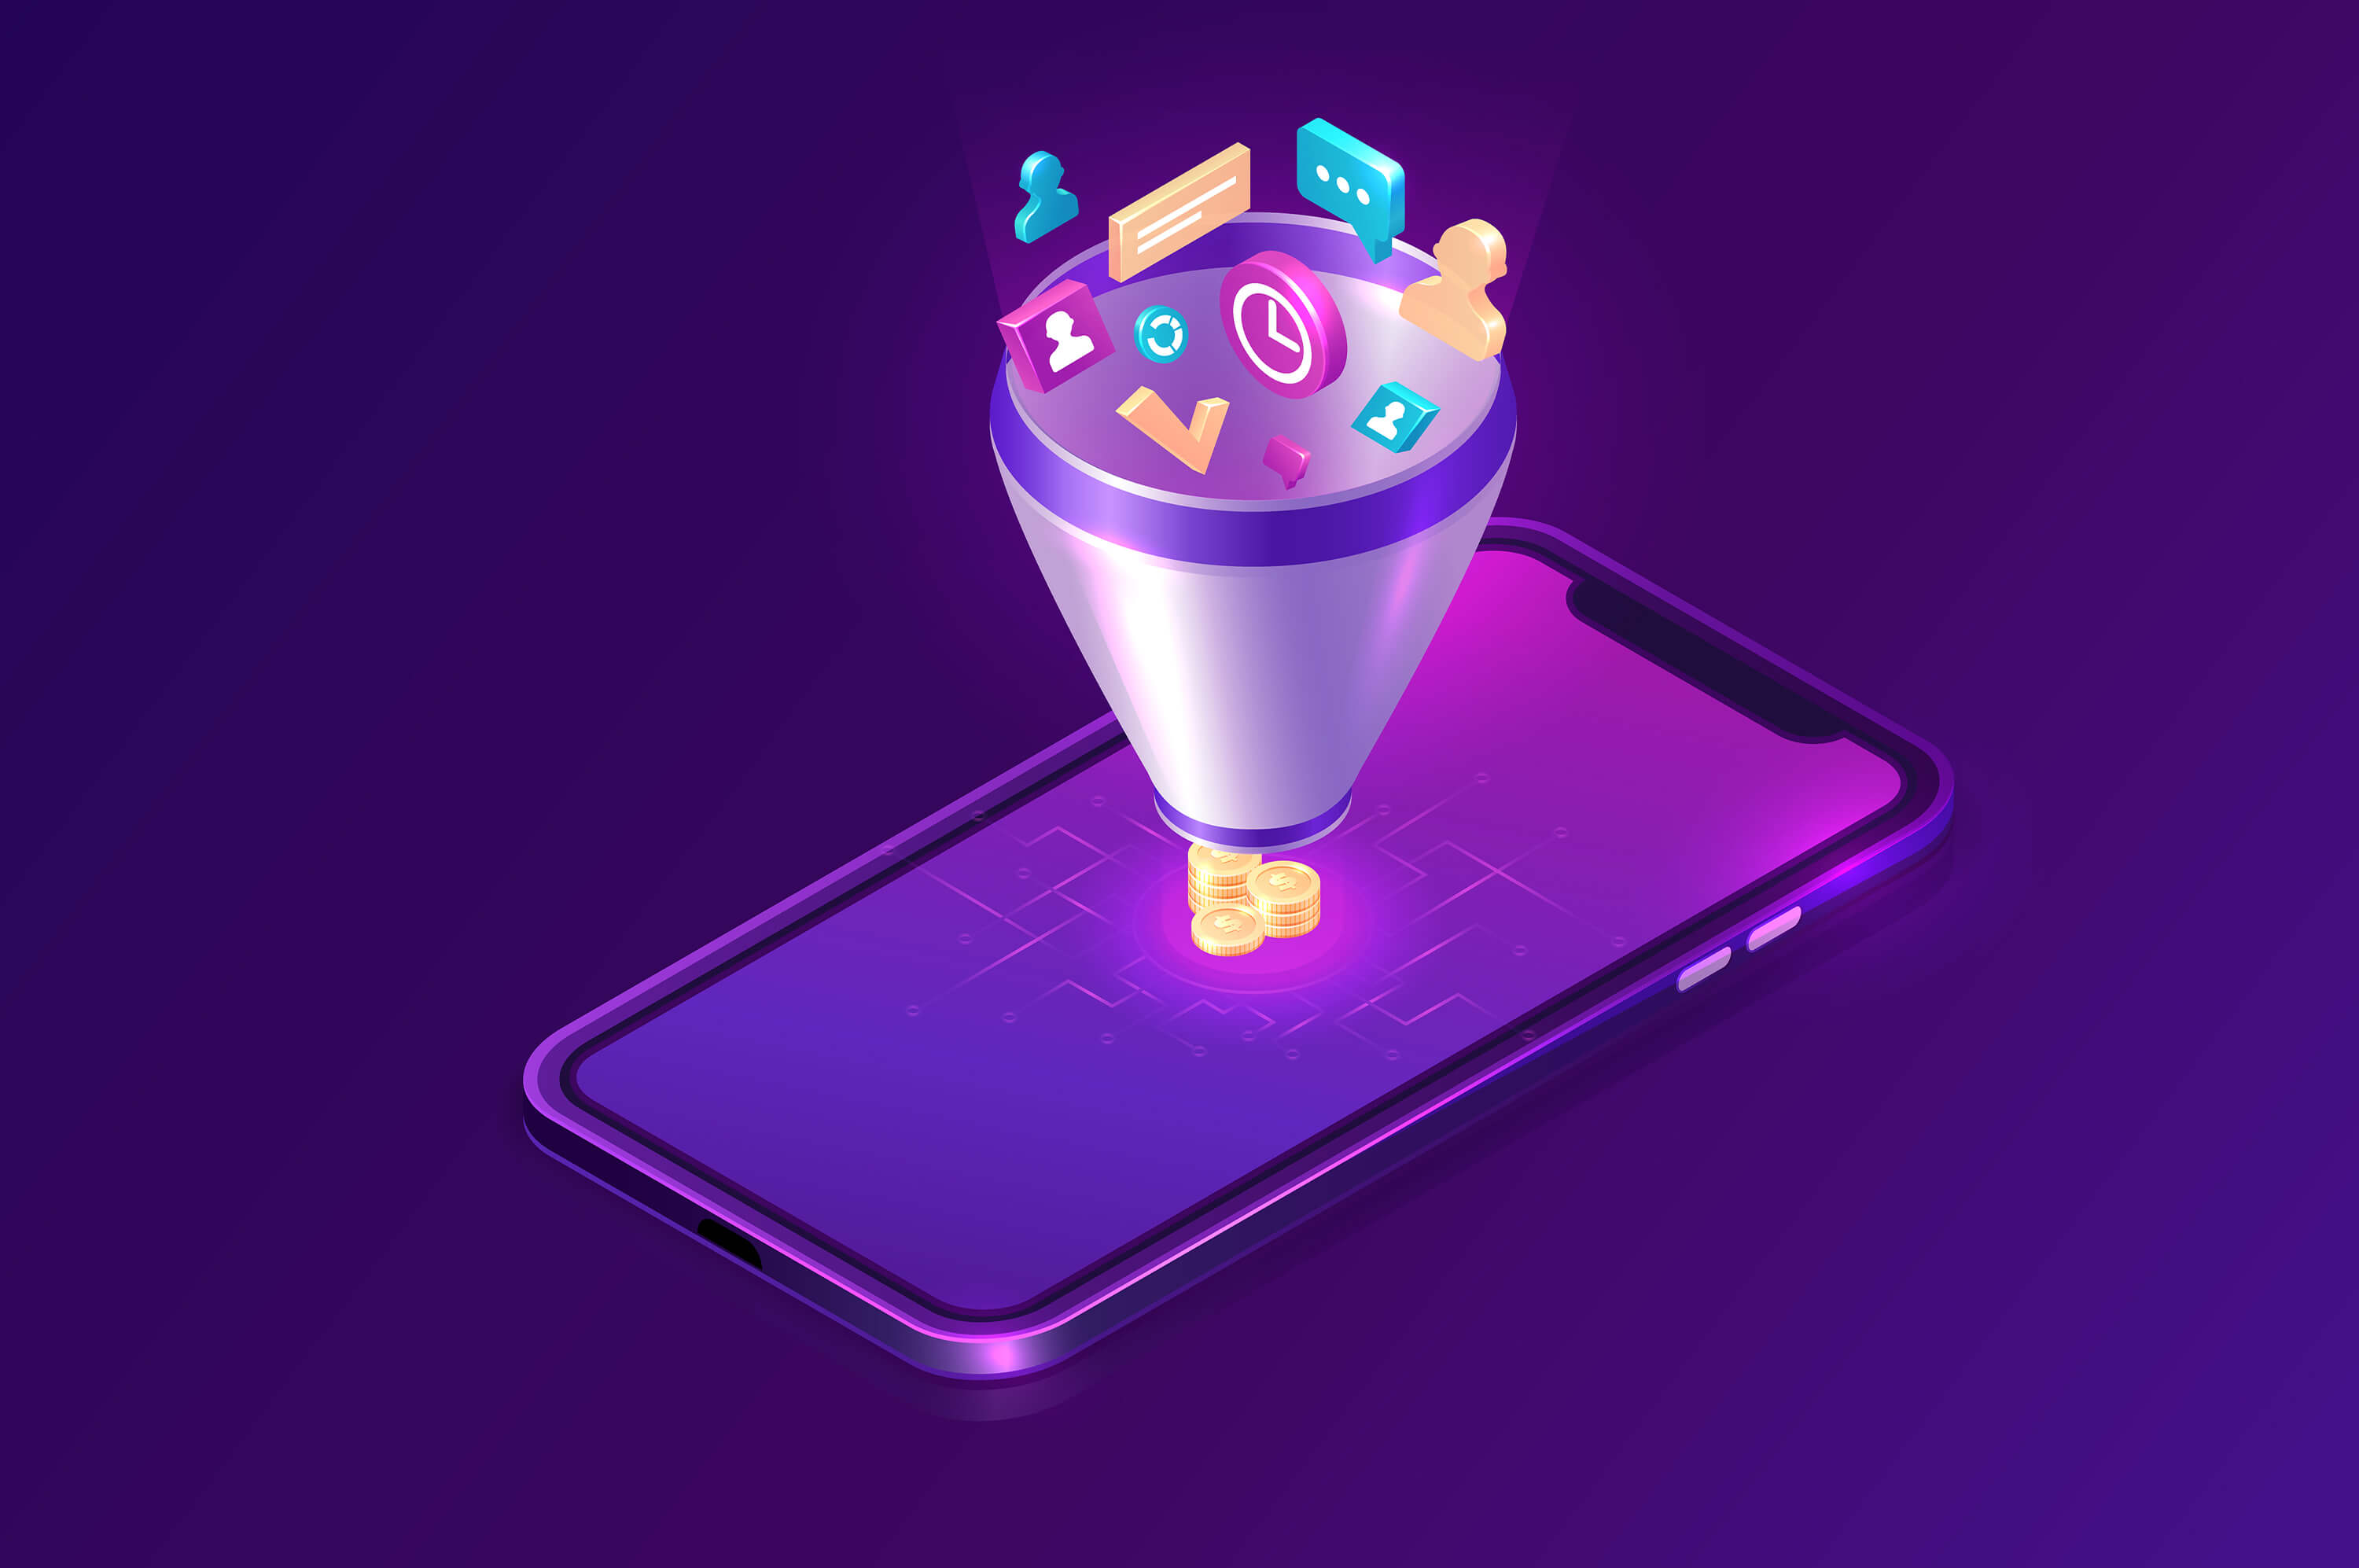 a smartphone on a violet background